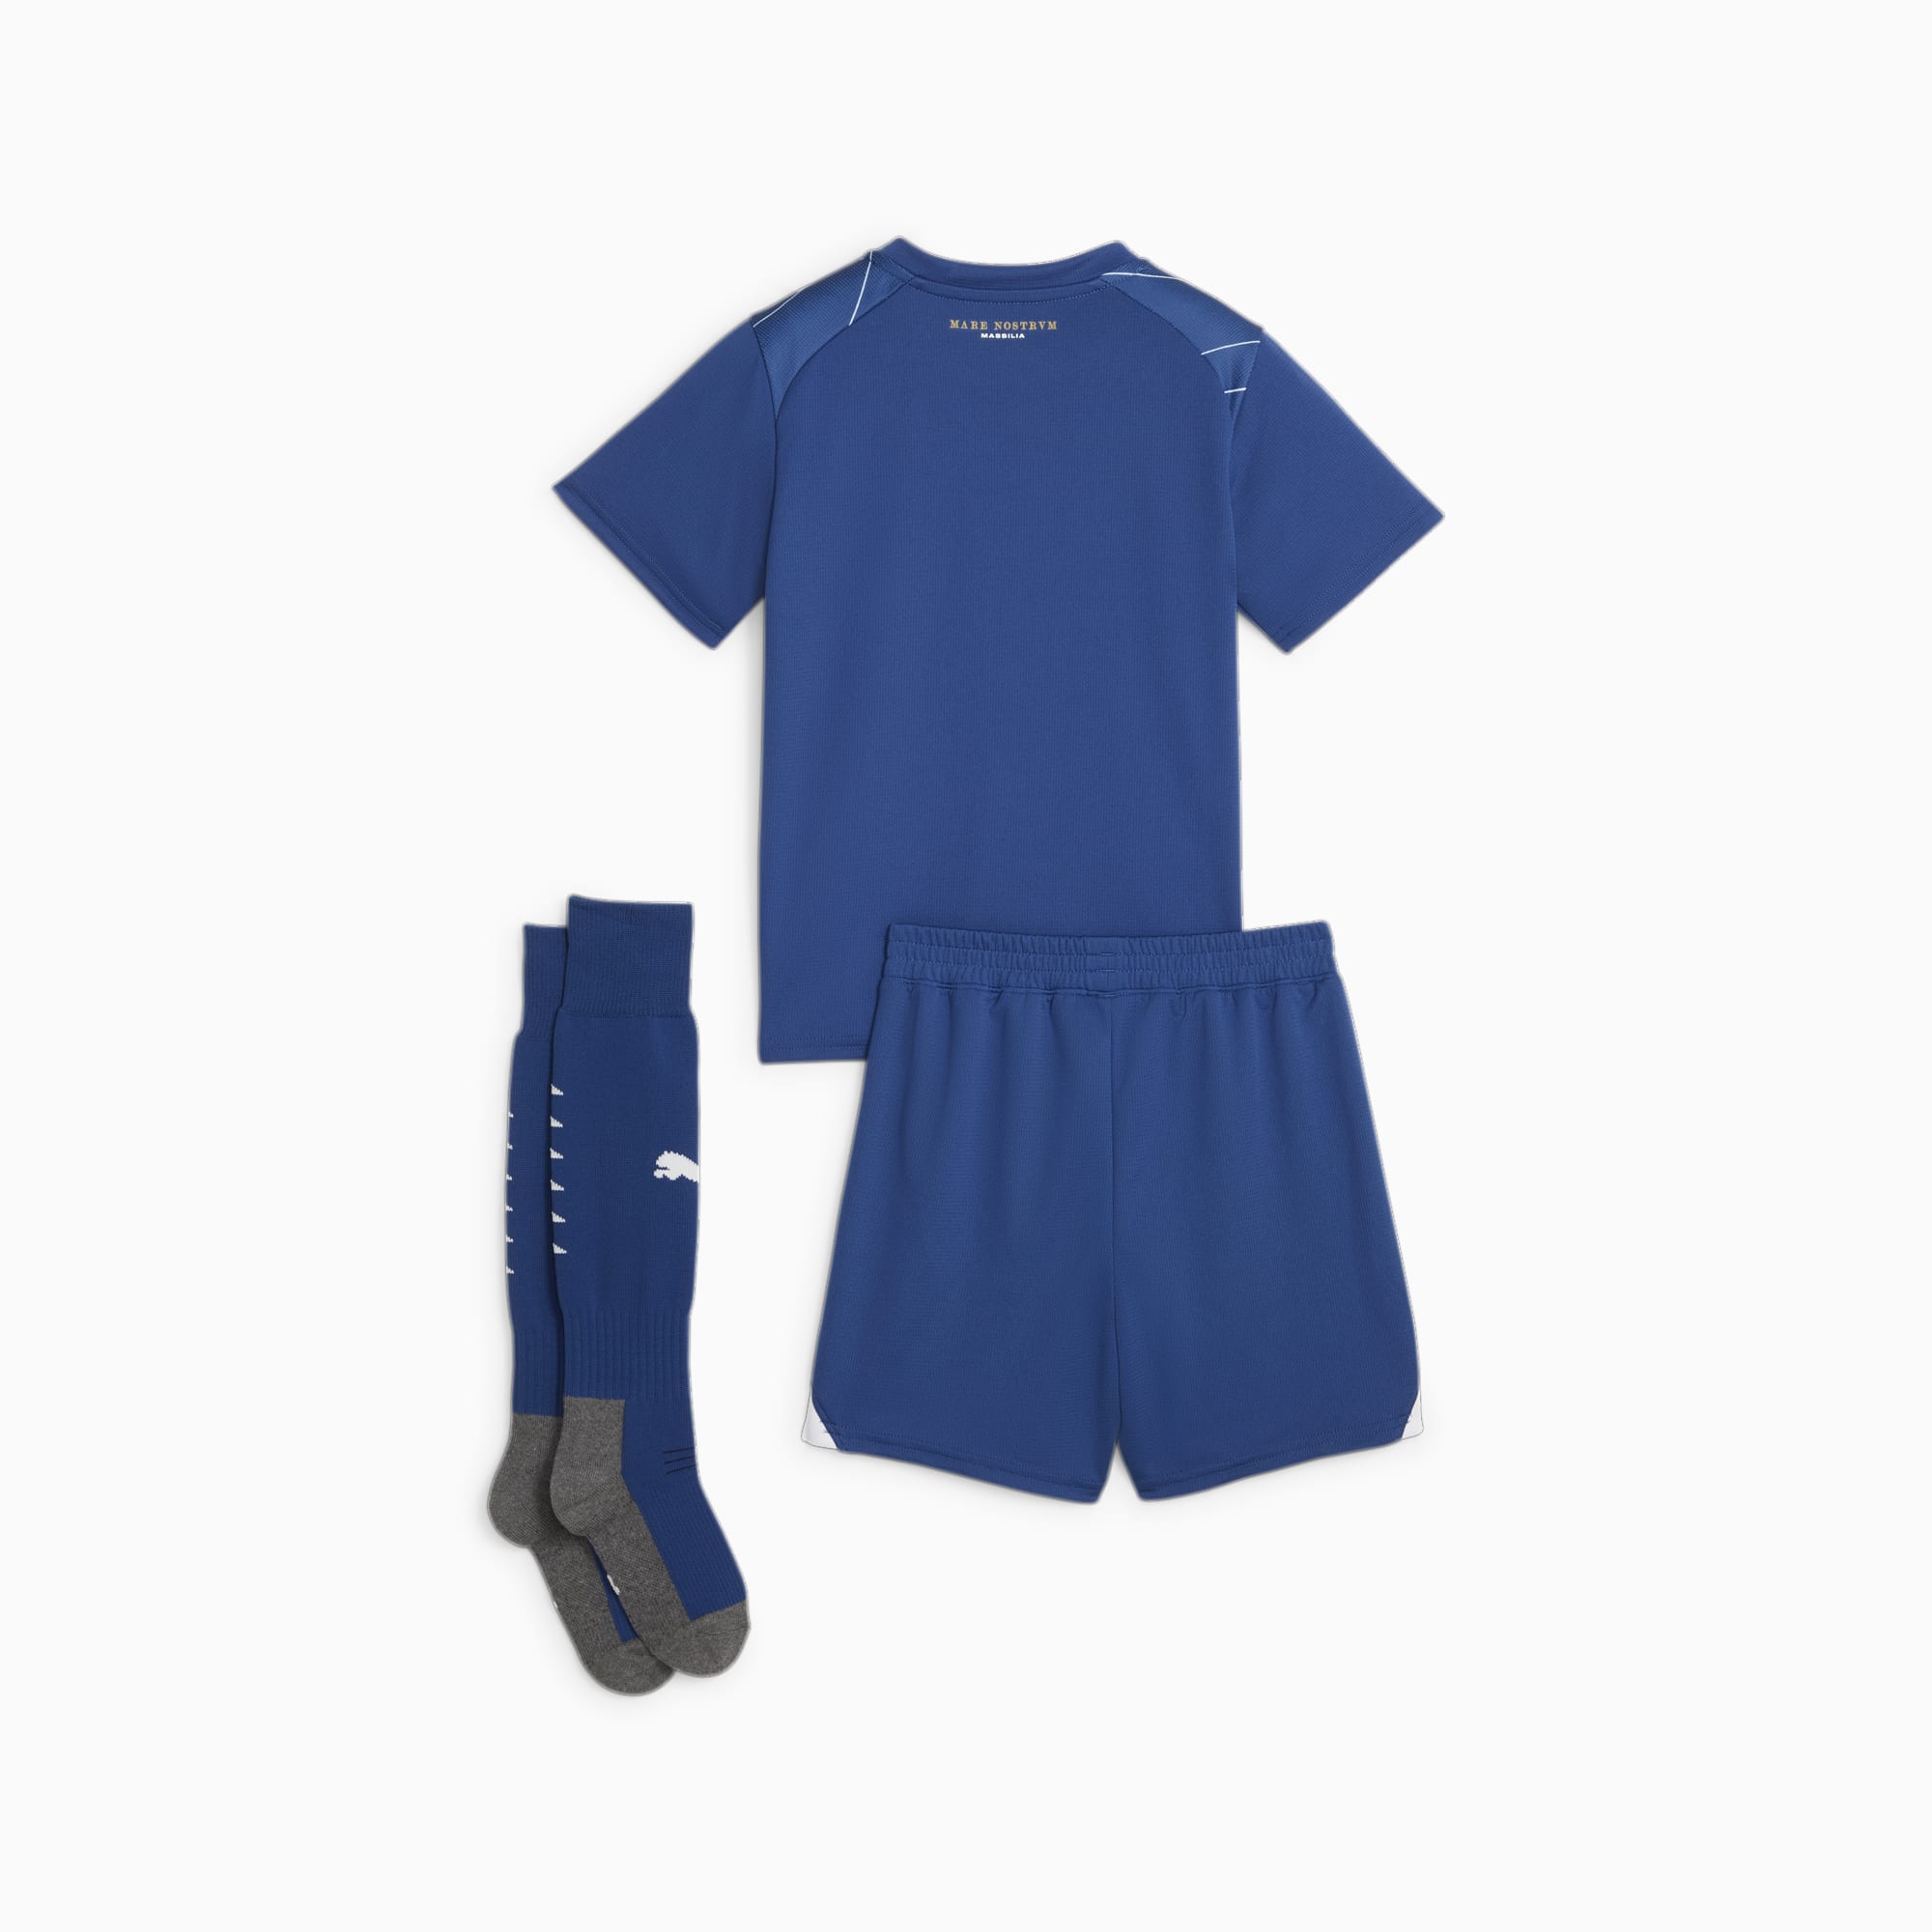 PUMA Olympique De Marseille 23/24 Away Minikit, Royal Blue, Size 92, Clothing